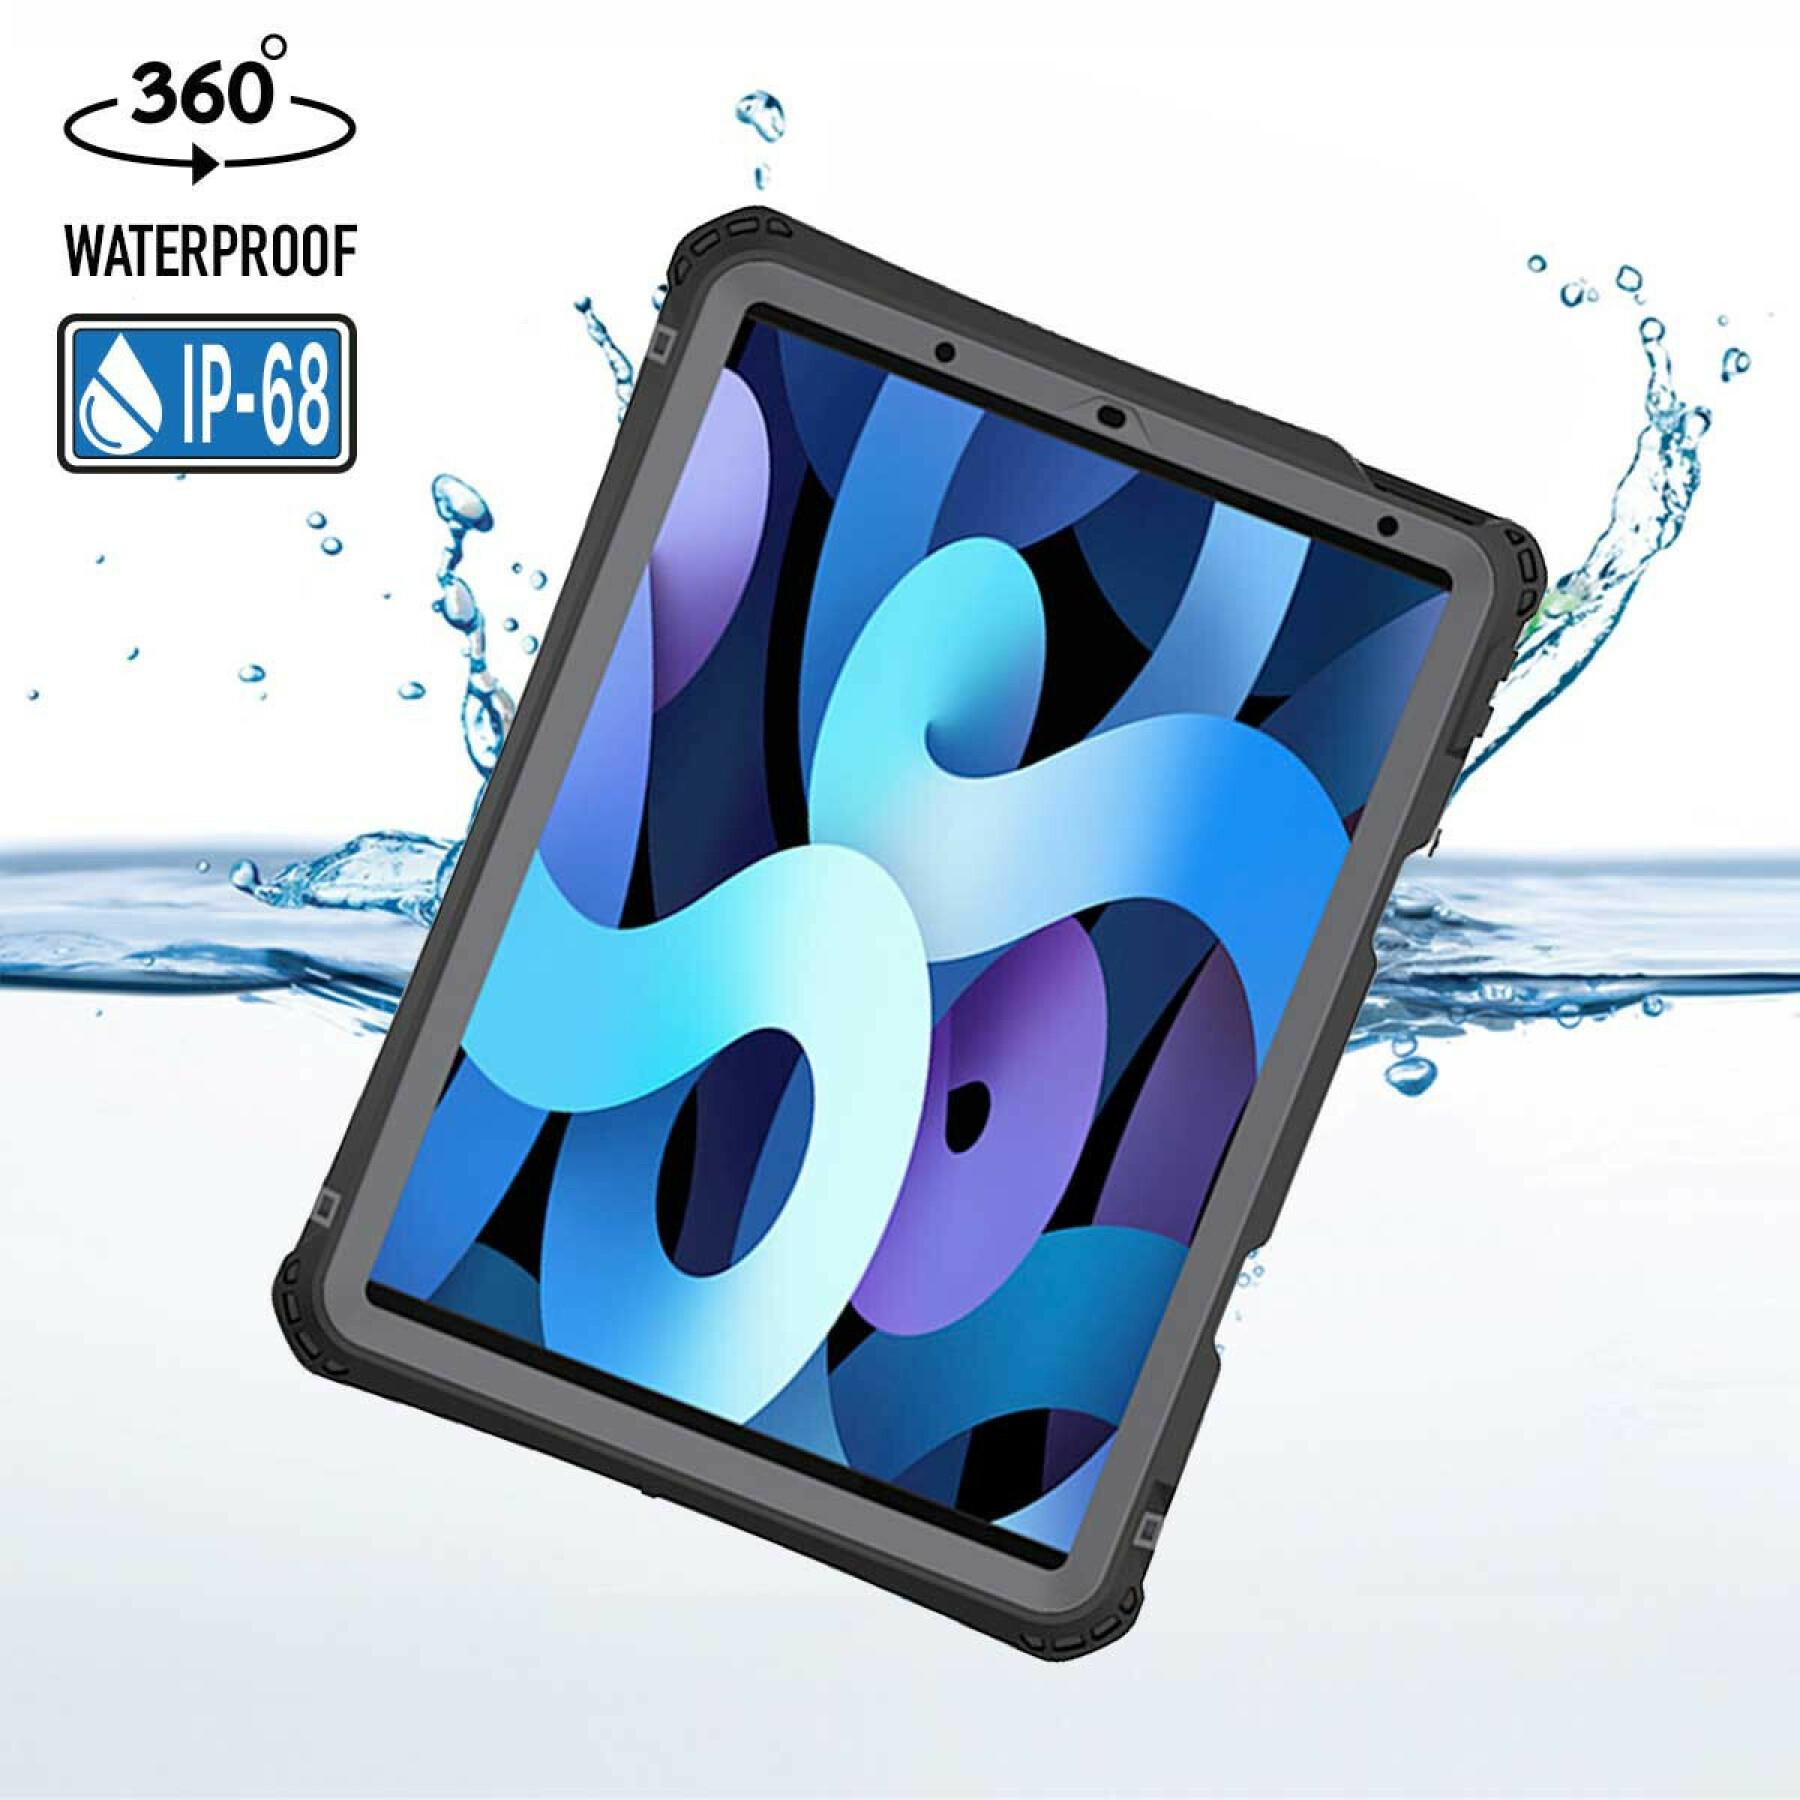 ipad air 5 /4 smartphone case waterproof and shockproof CaseProof